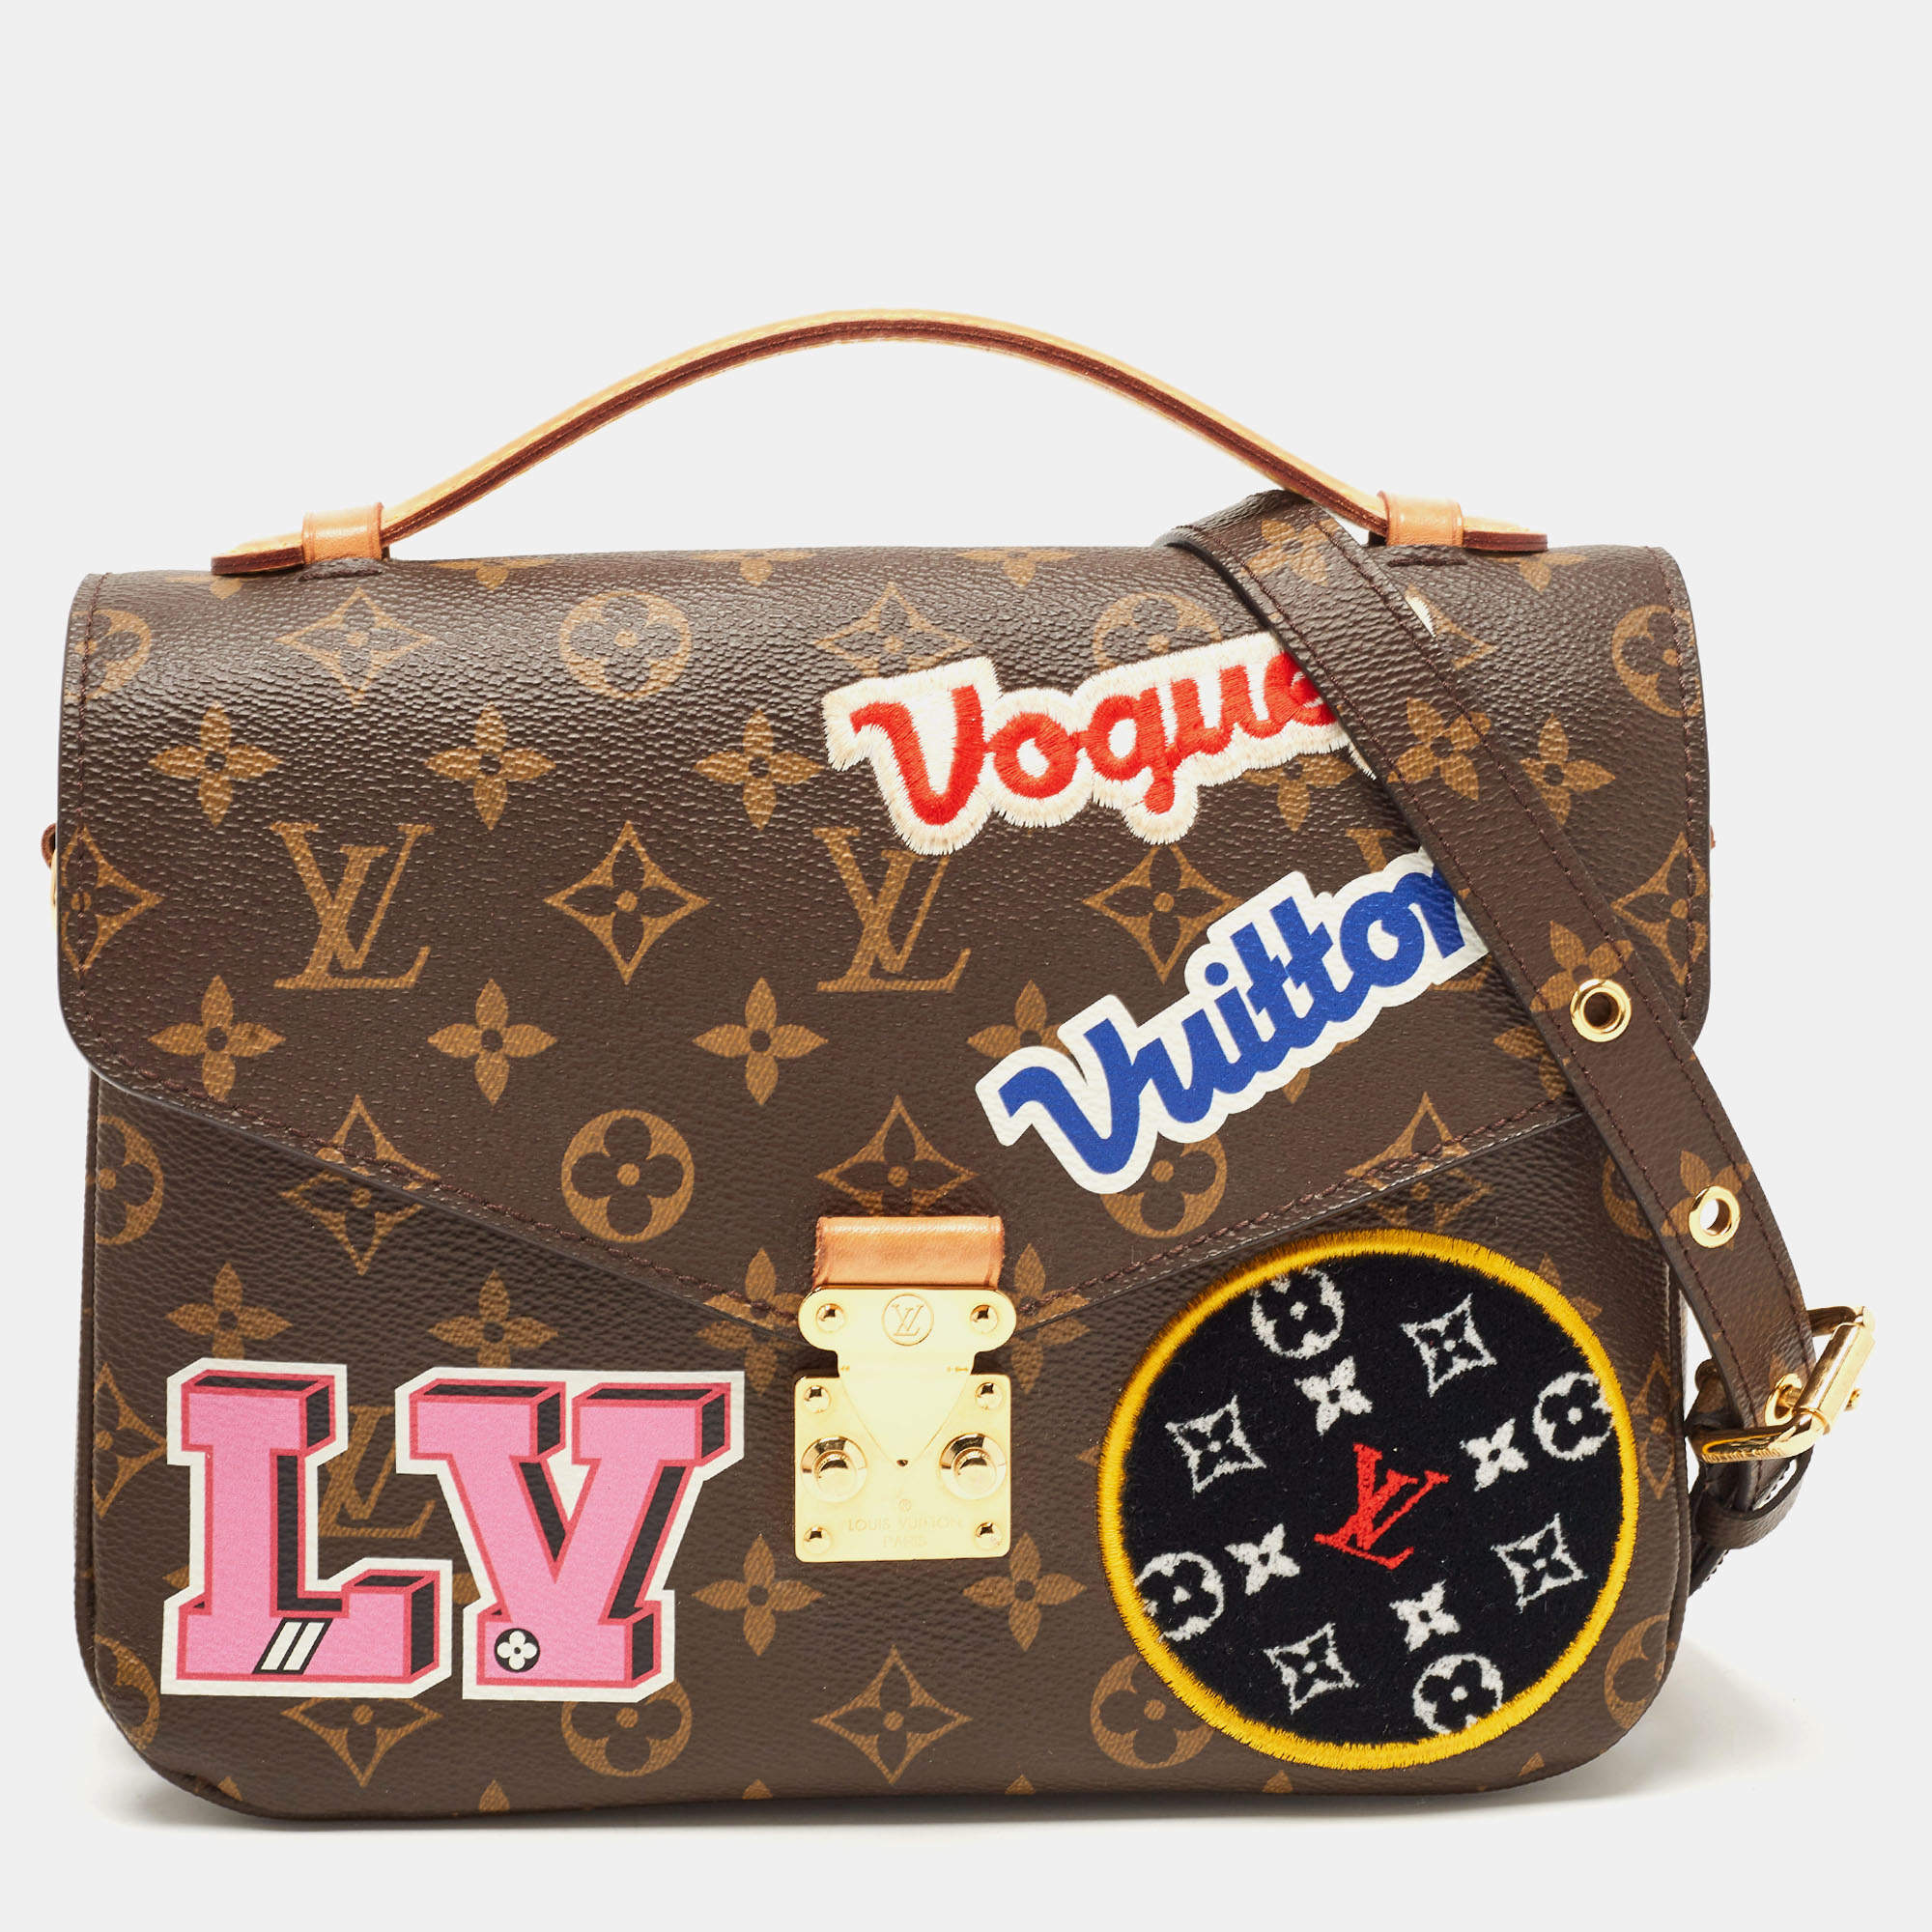 Louis Vuitton Handbags - LV Limited edition Pochette METIS Red